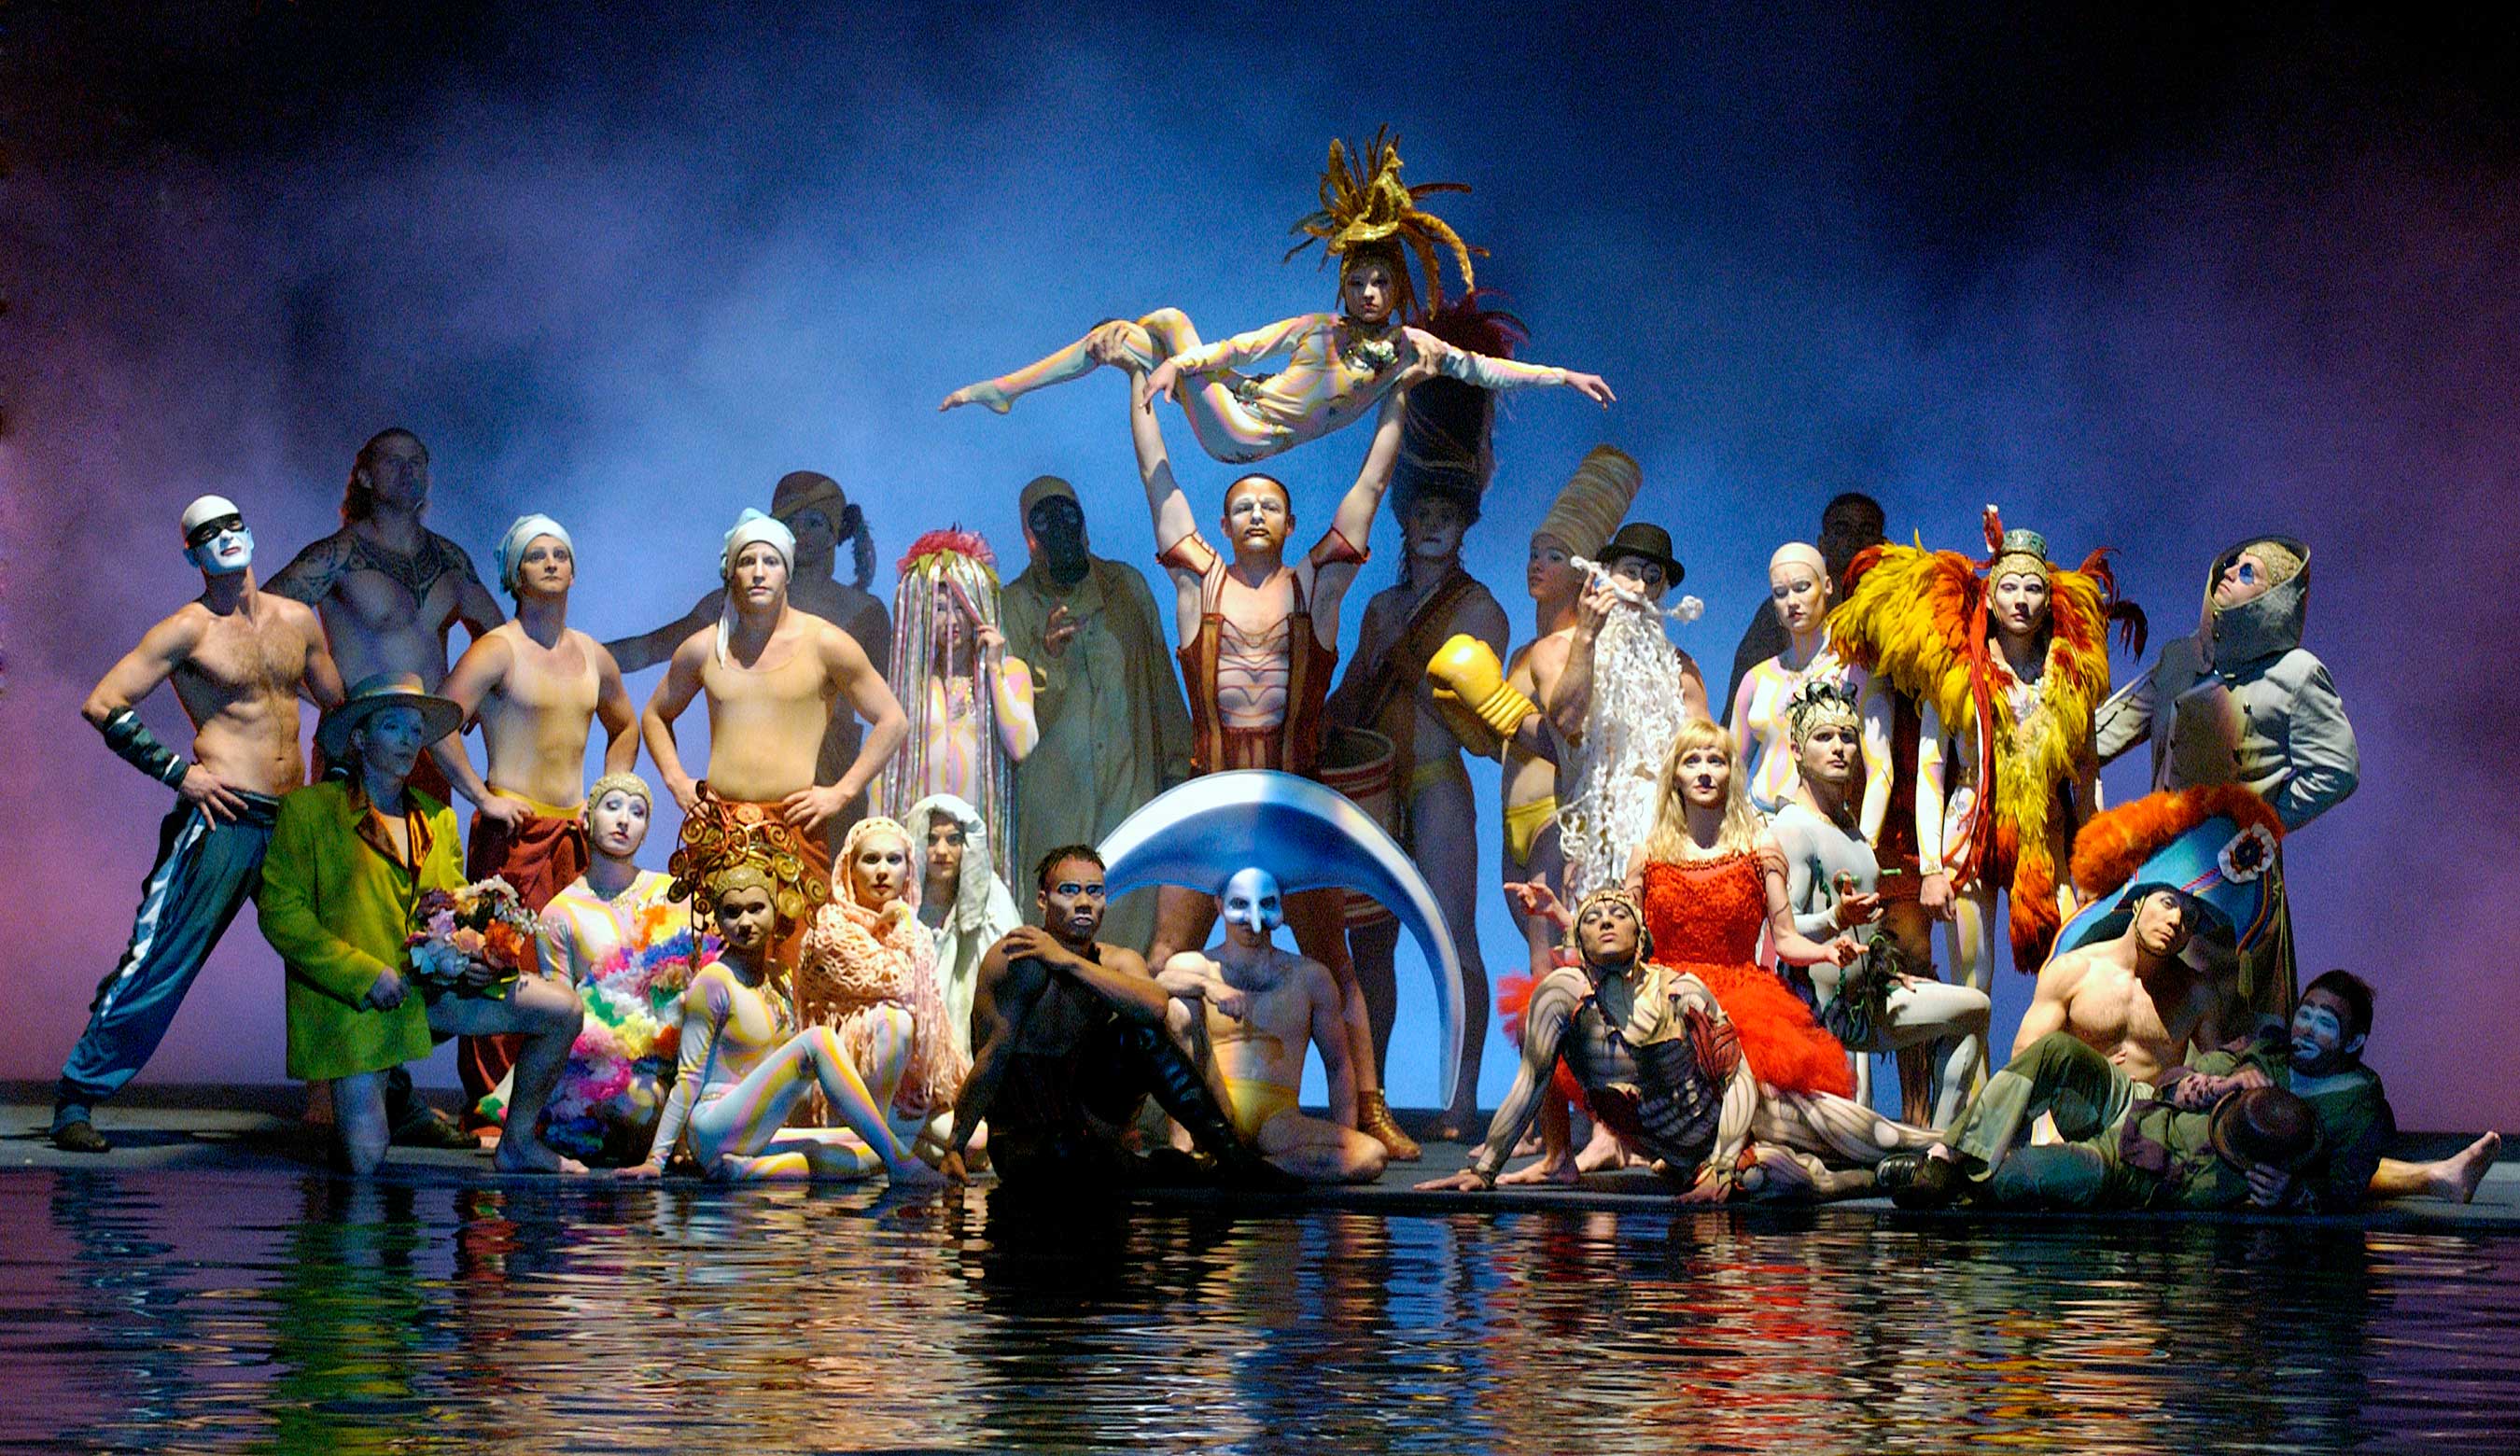 “O™” by Cirque du Soleil at Bellagio Resort & Casino Celebrates 25 Years in October